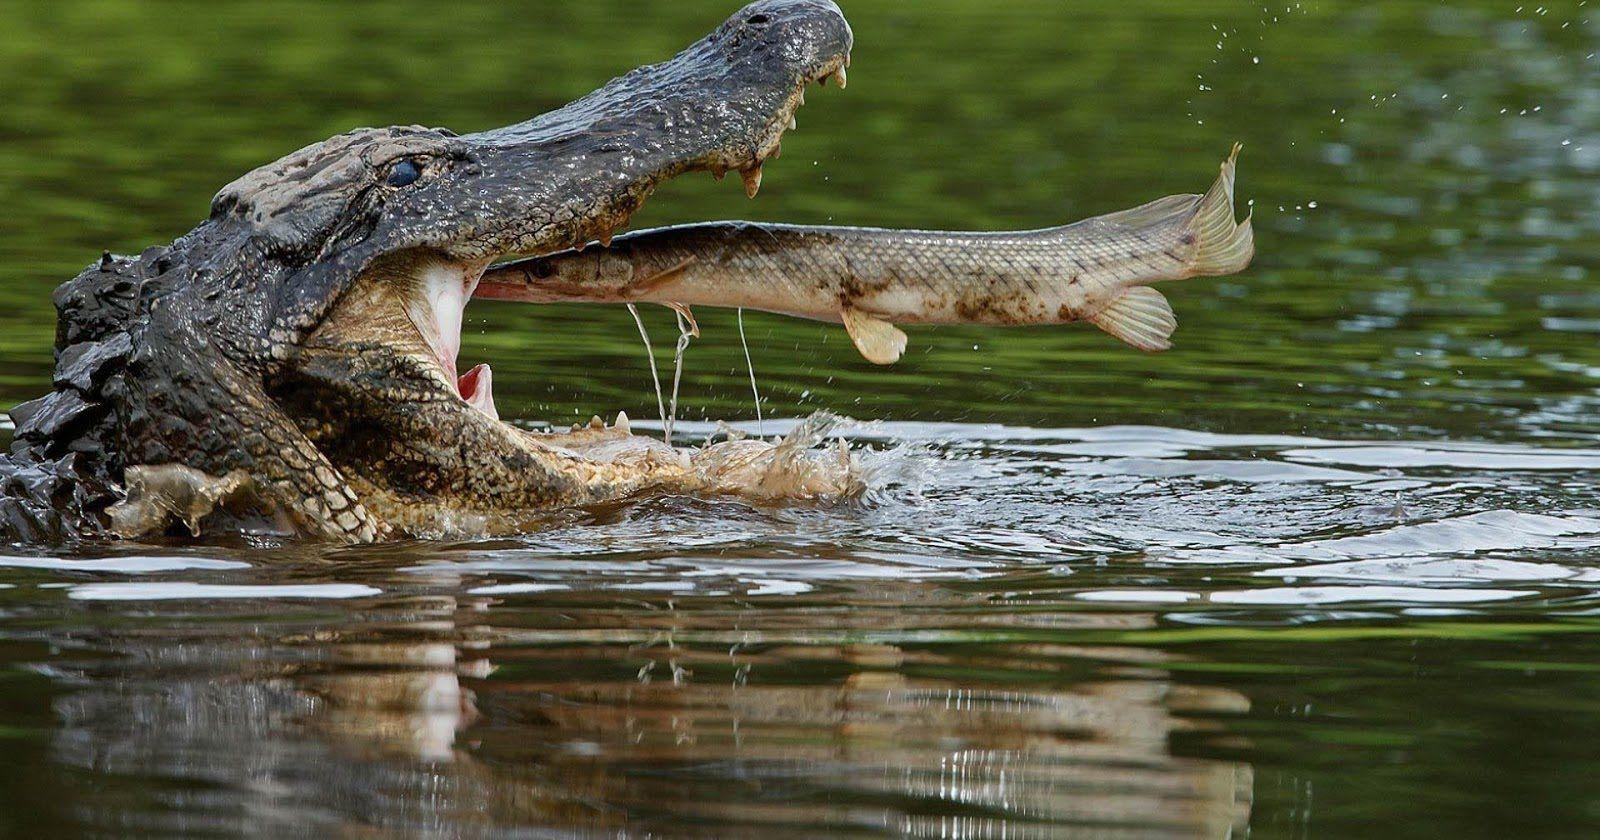 Crocodile HD Image, Get Free top quality Crocodile HD Image